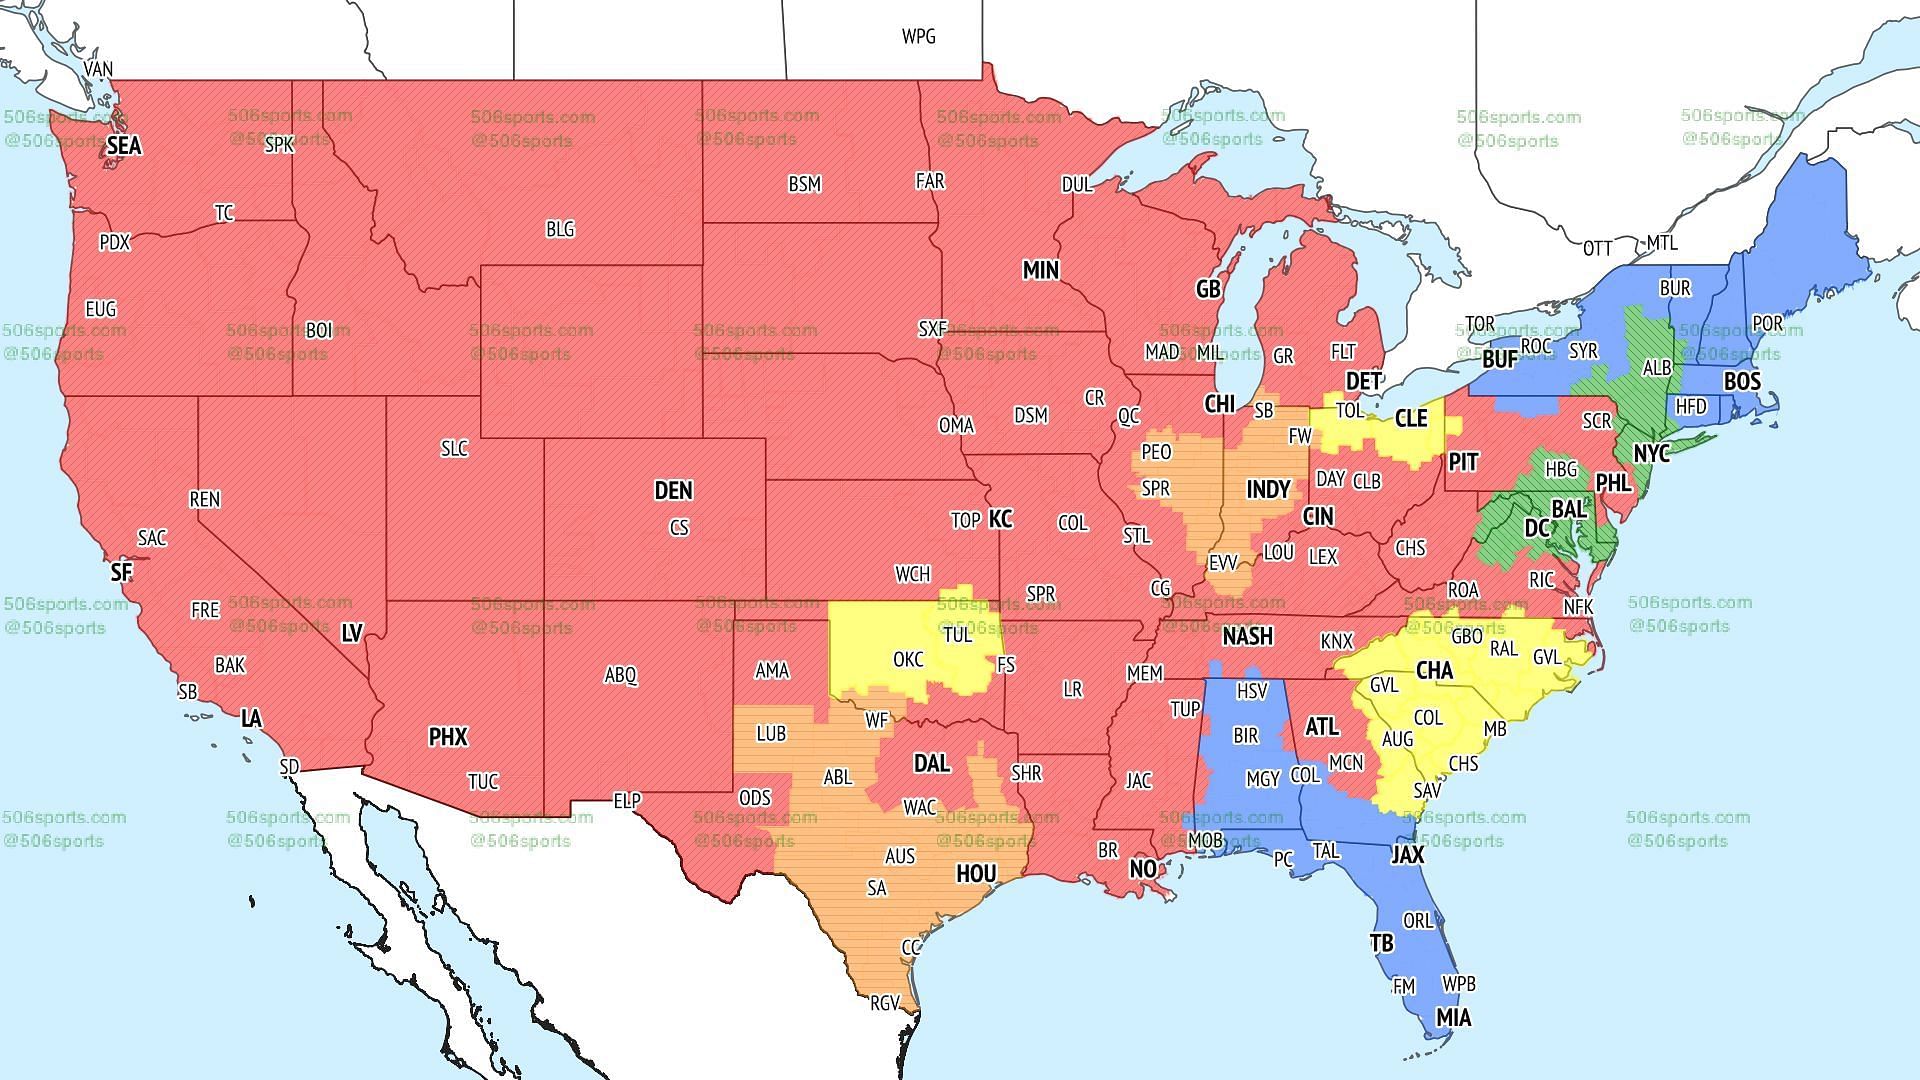 CBS early window coverage map. Photo via 506sports.com